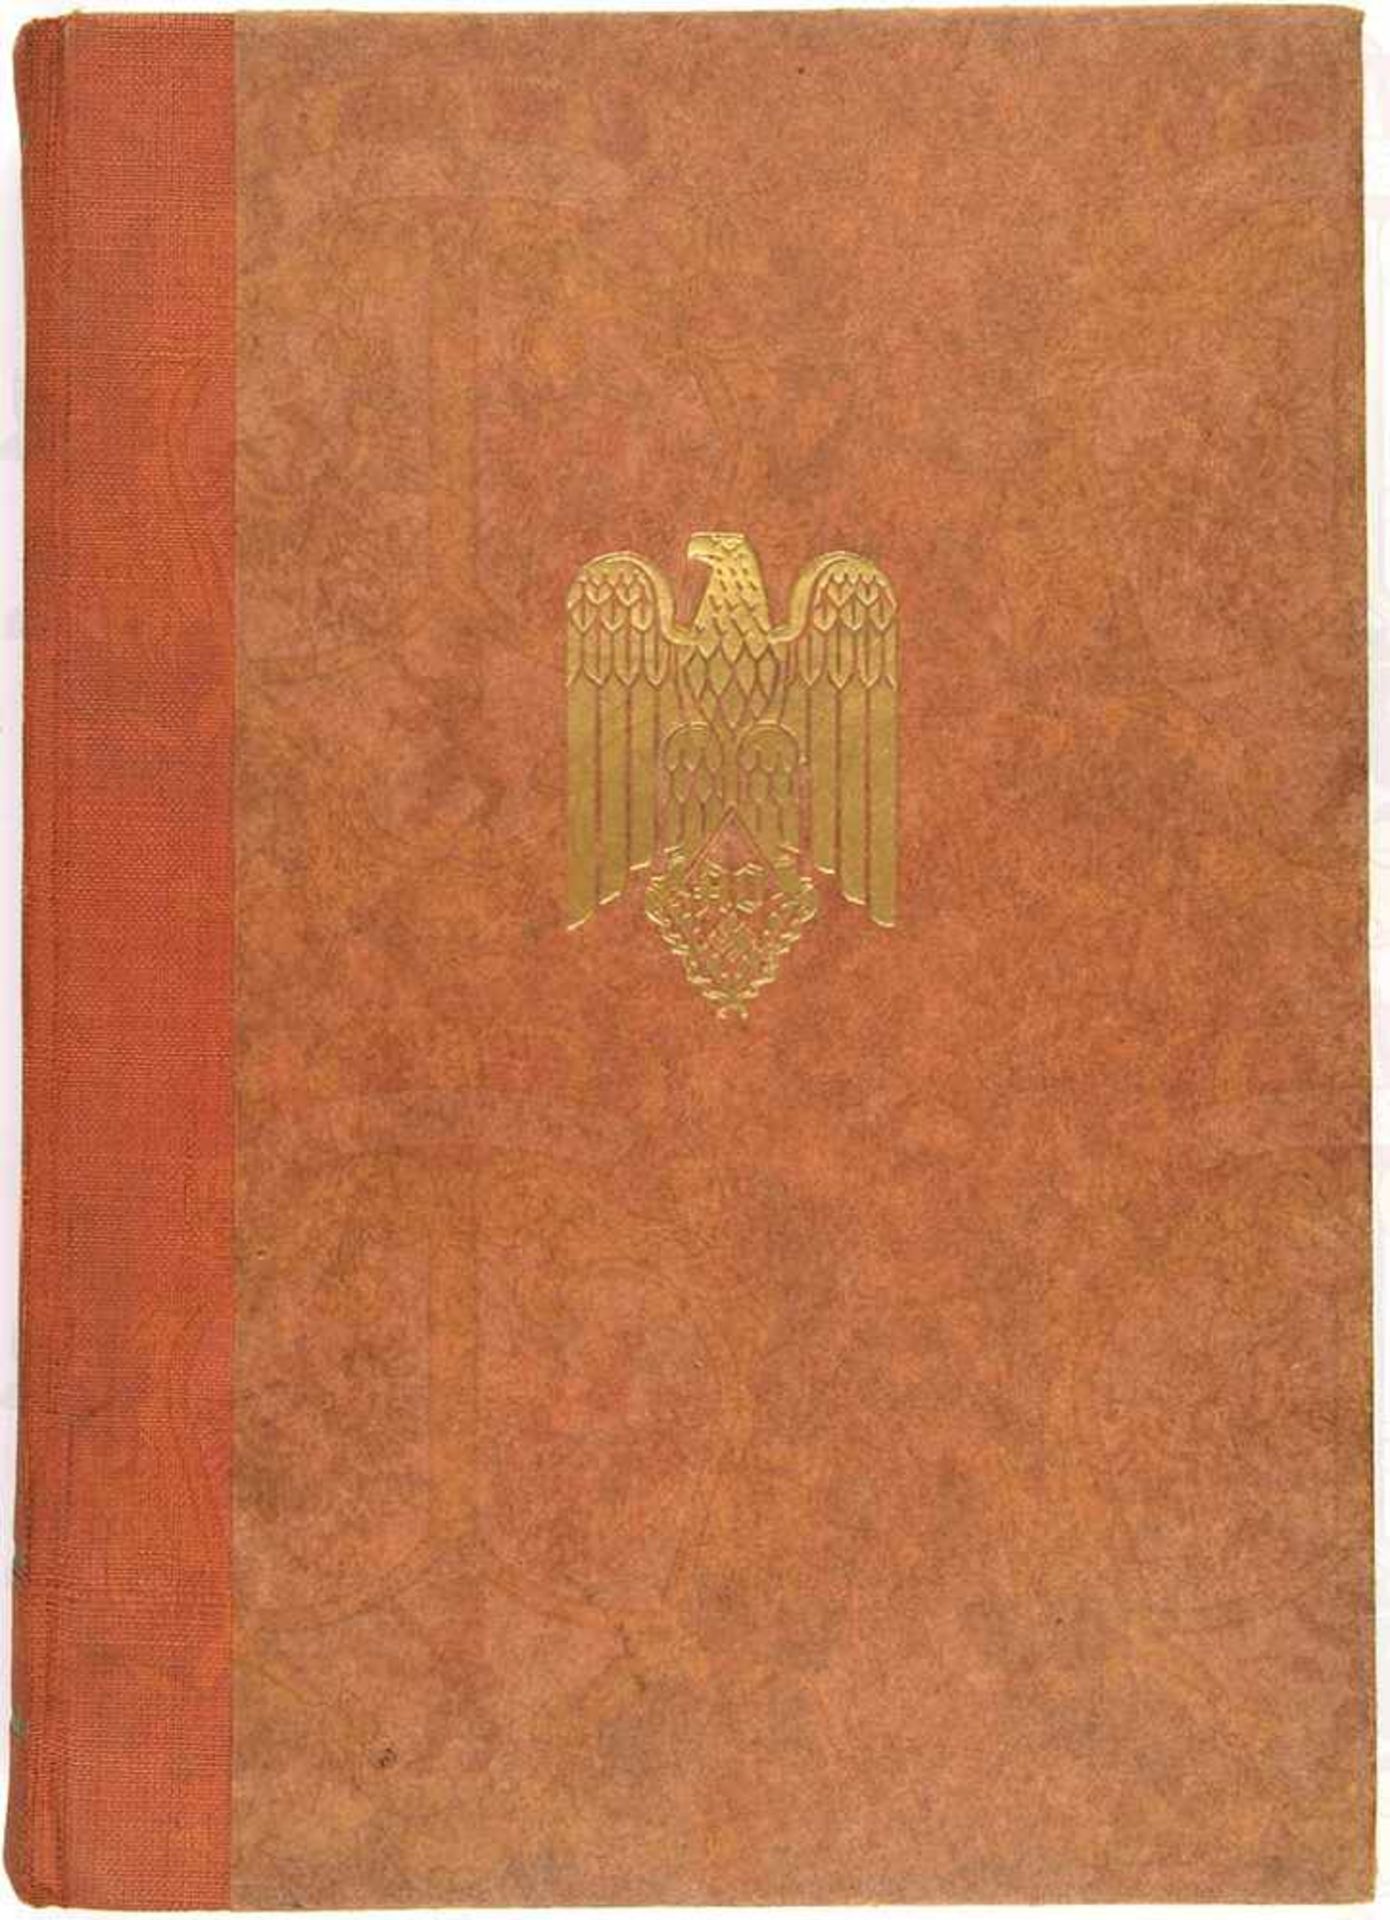 JAHRBUCH DER AUSLANDS-ORGANISATION DER NSDAP, „f. d. Seeschiffahrt 1942“, zahlr. Fotos, 448 S., - Bild 2 aus 3